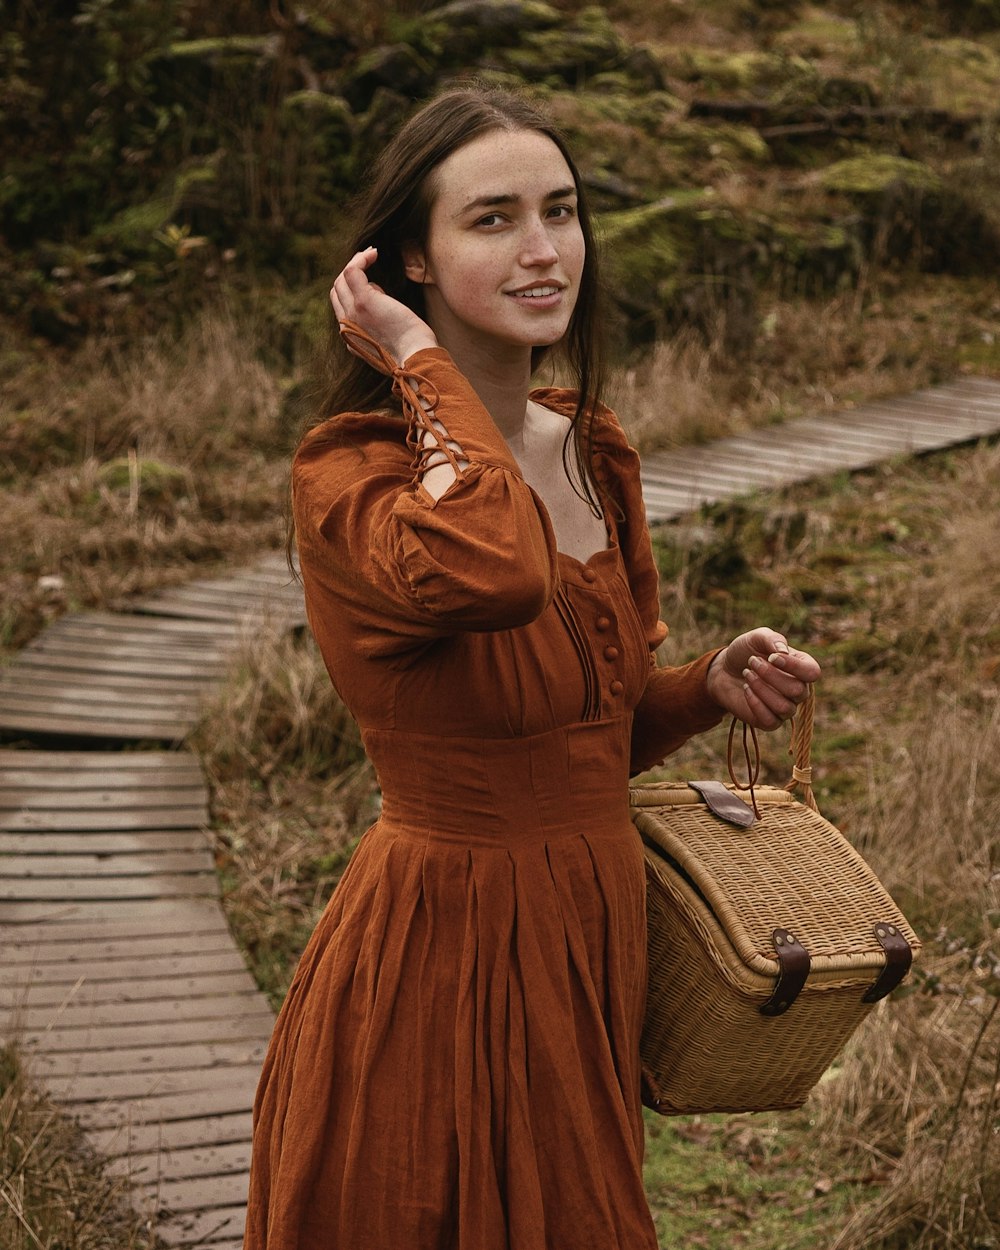 Una donna in un vestito arancione tiene in mano un cesto